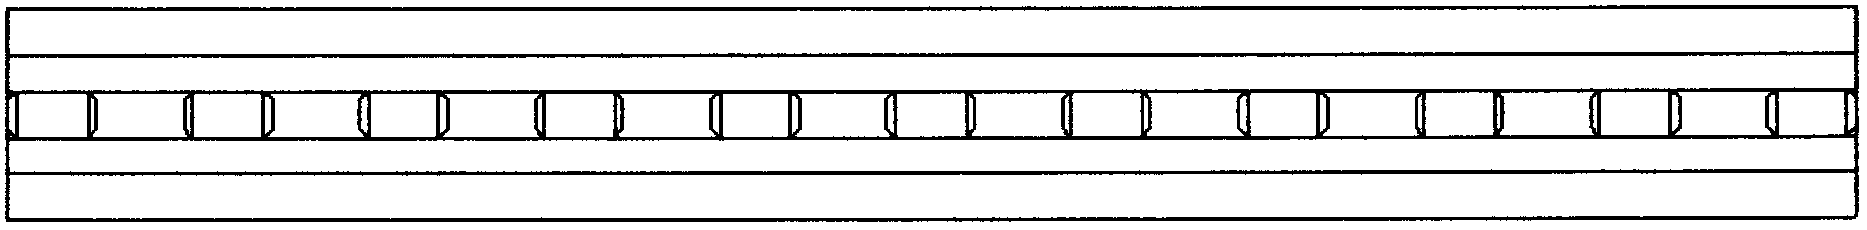 Guardrail type step pitch gauge